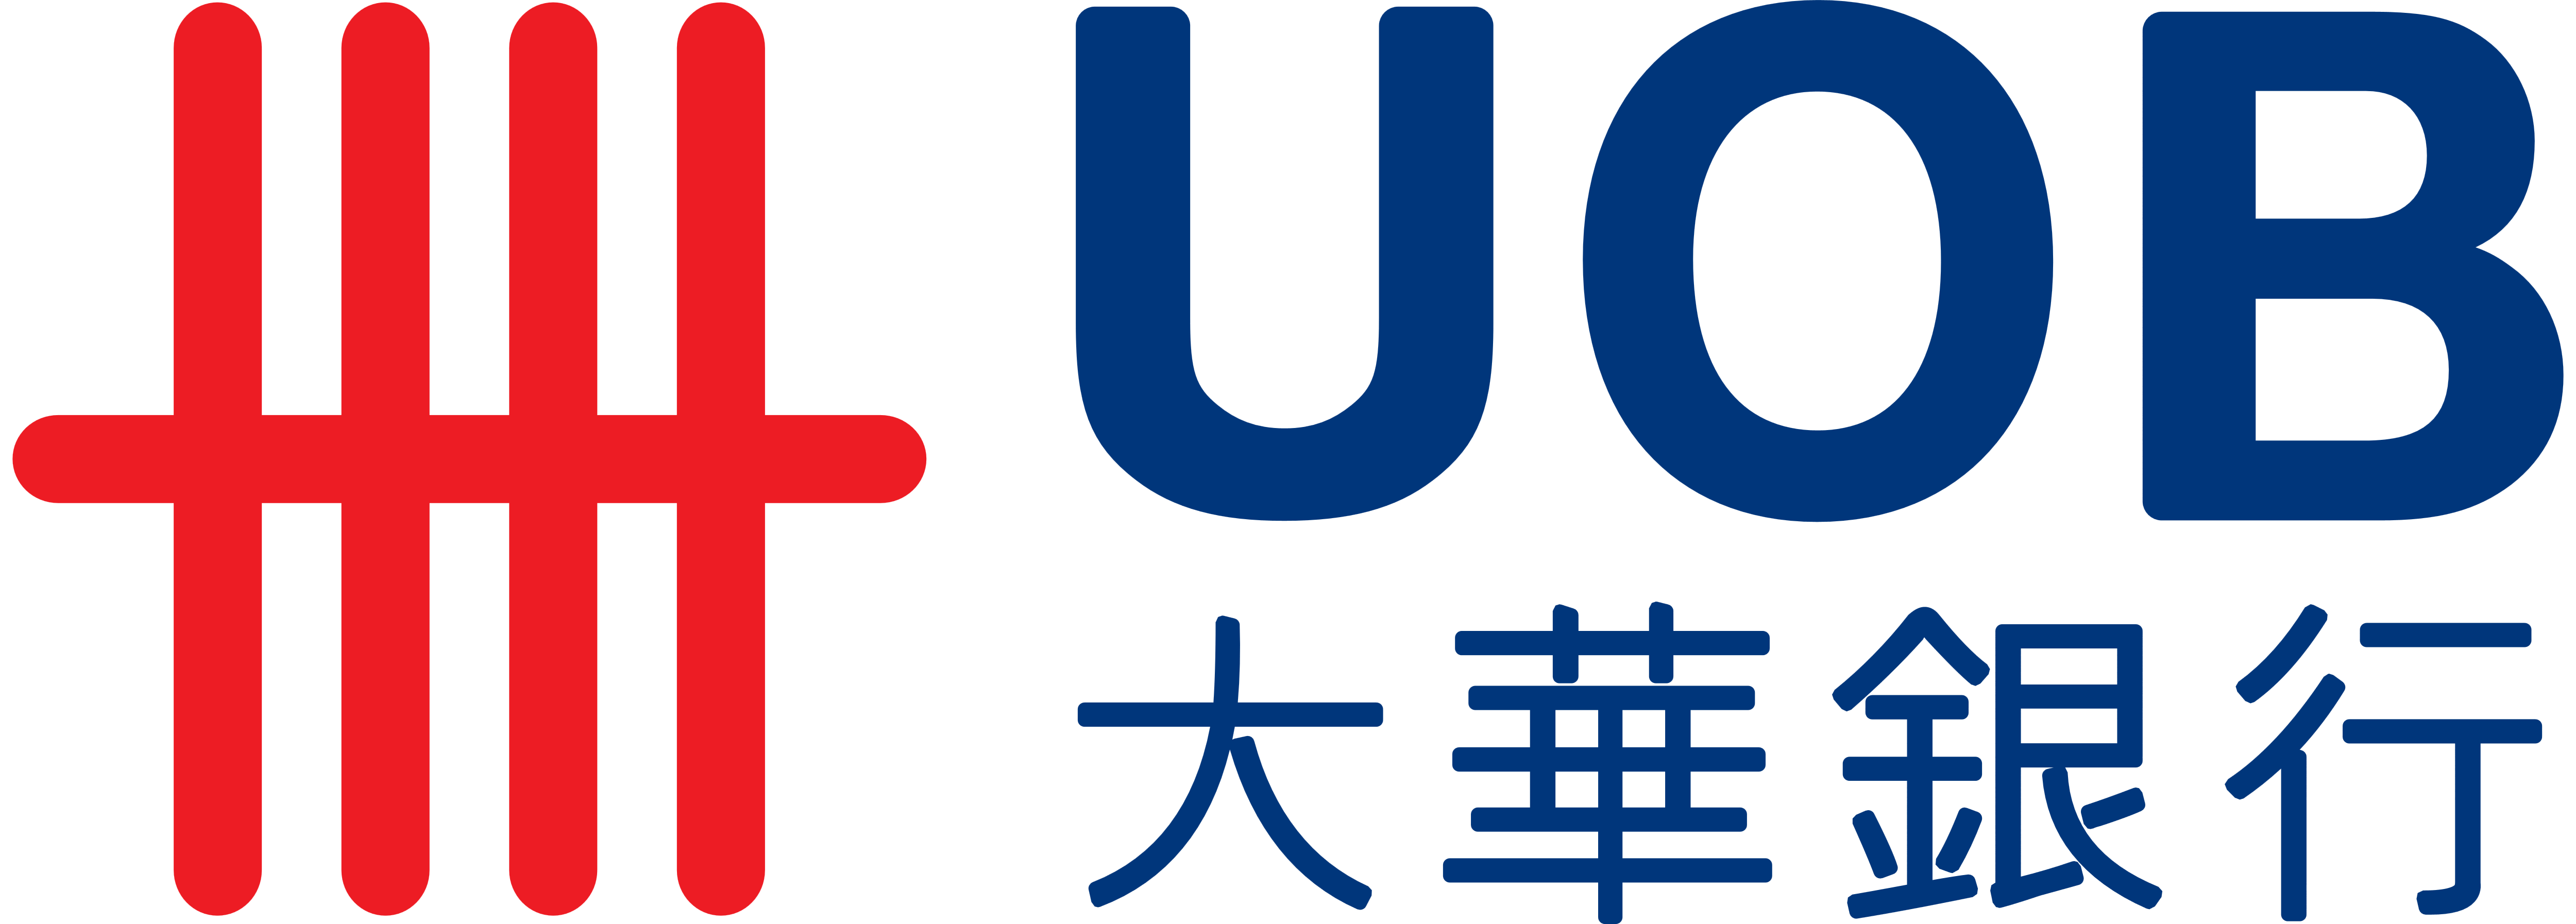 marketing strategy of UOB - logo